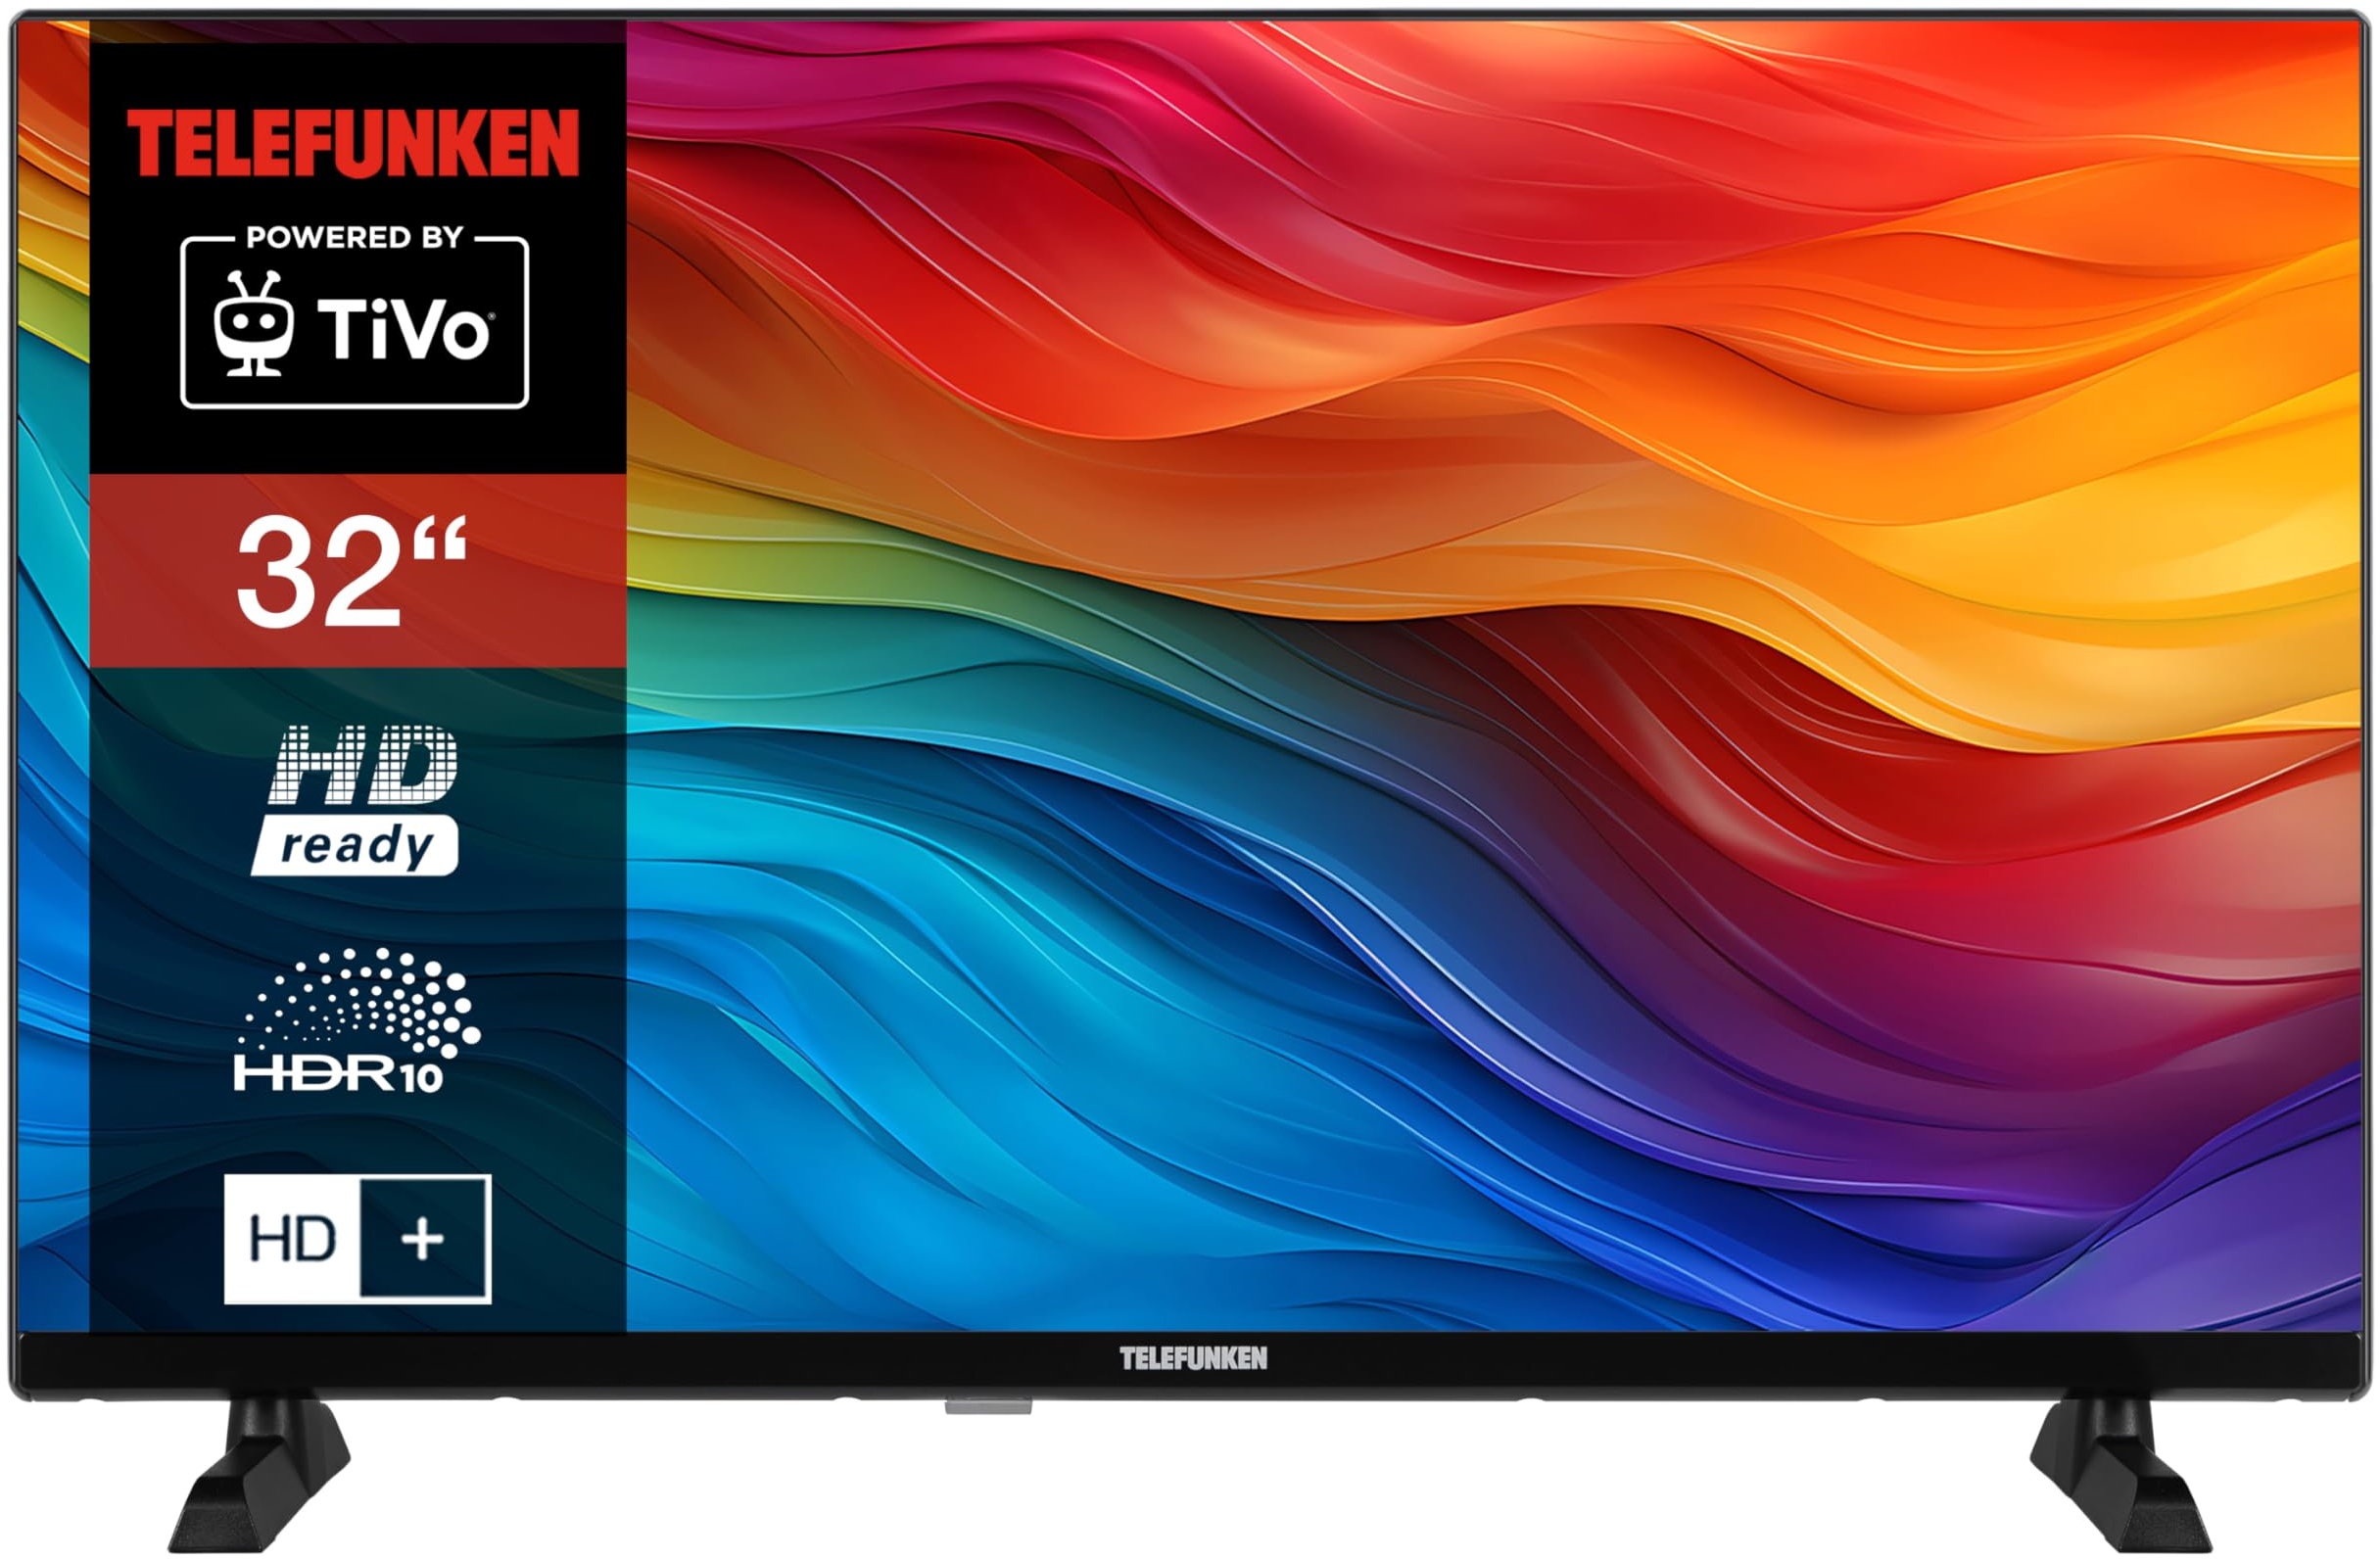 Telefunken 32 Zoll Fernseher/TiVo Smart TV (HD-Ready, HDR, HD+ 6 Monate inkl., Triple-Tuner) XH32TO750S